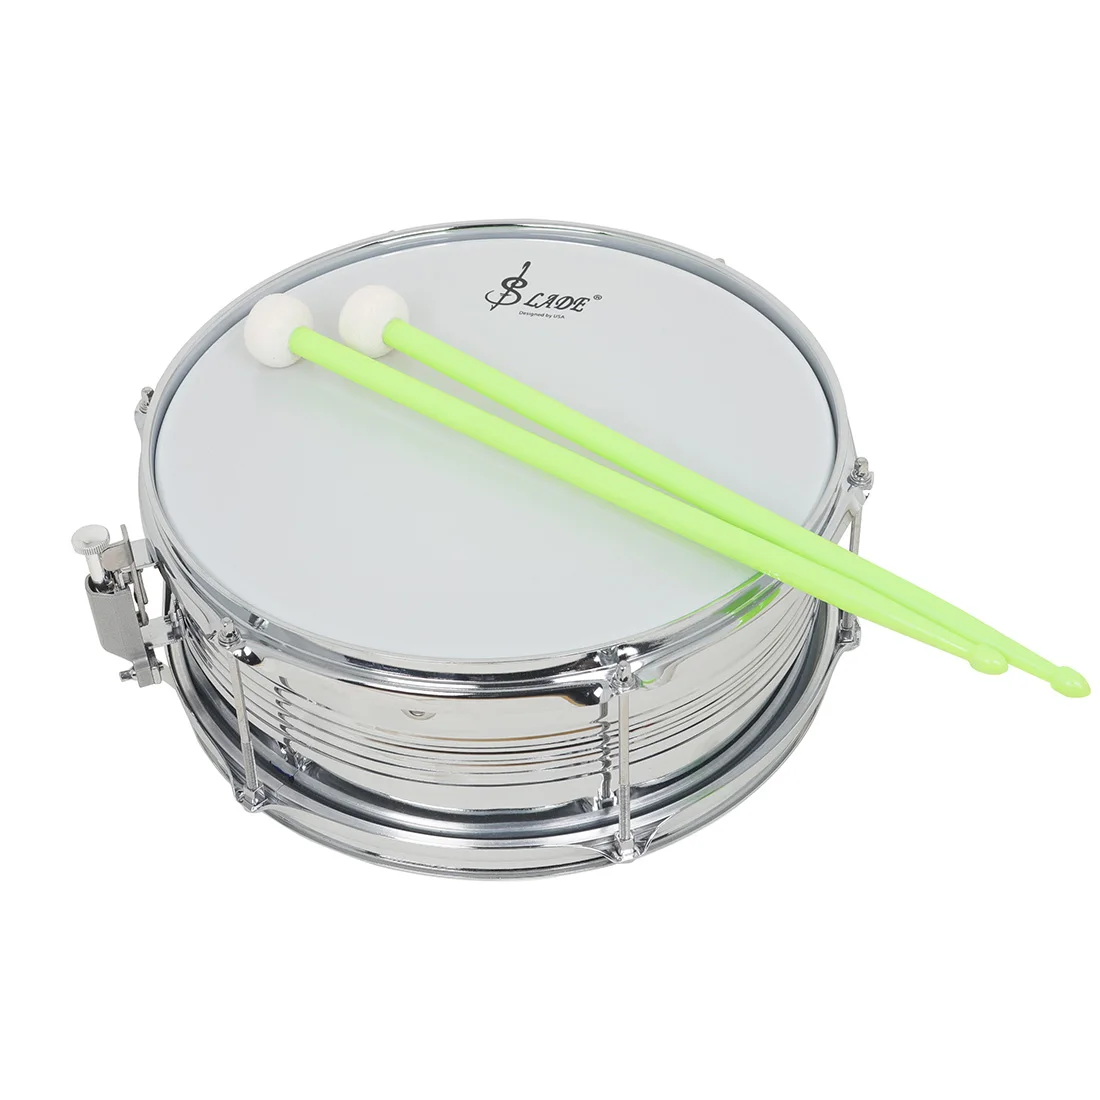 2Pcs/Set Drumsticks Nylon Material Mulitifunctions Dual Heads Drum Sticks Colourful Jazz Music Tools Percussion Instrument Parts enlarge